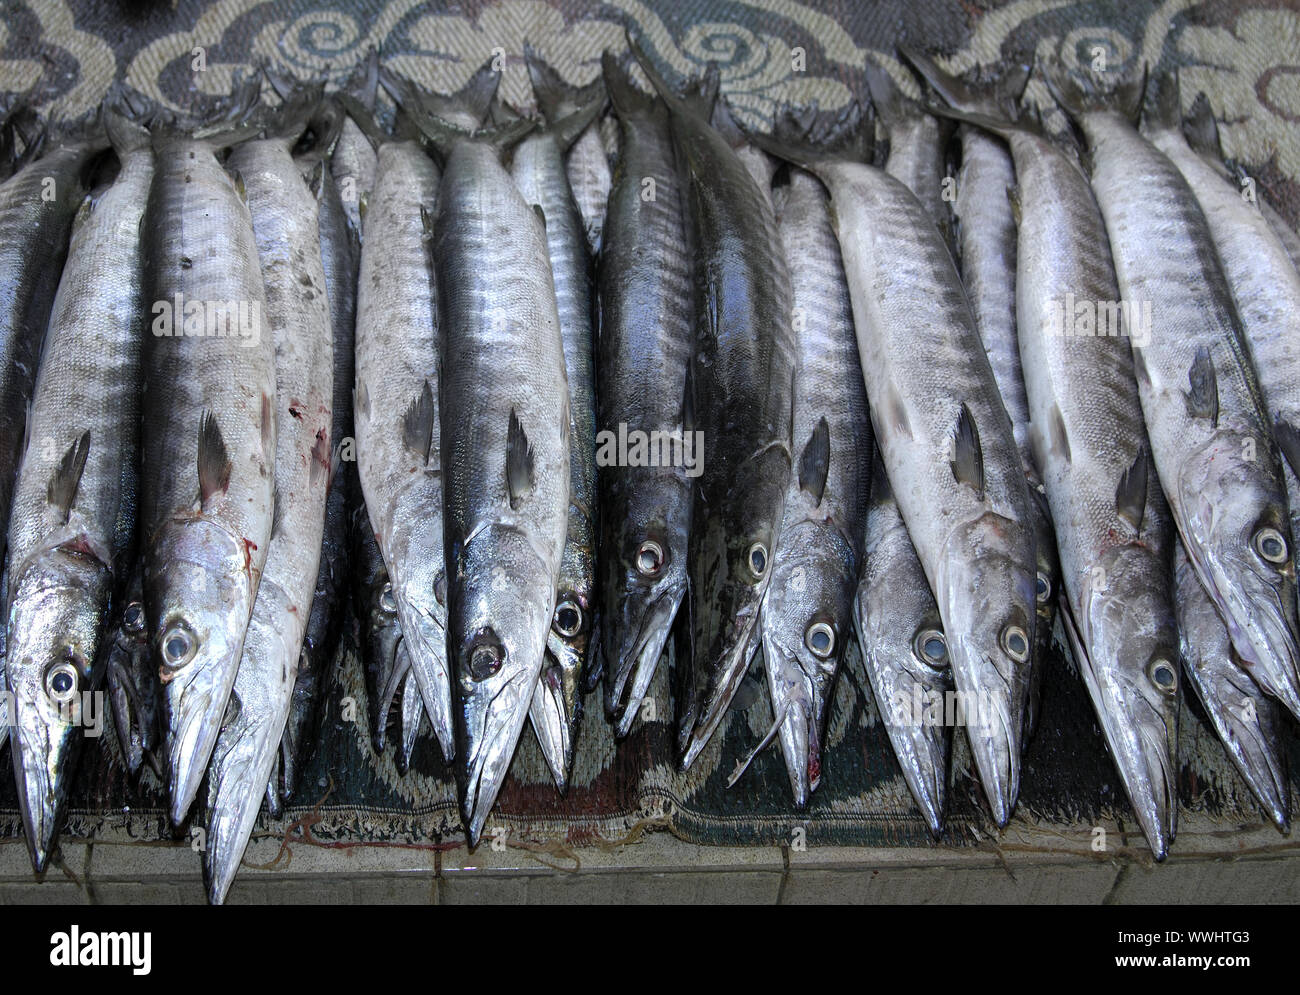 Freshly caught fish at the Mutrah Fish Market Stock Photo